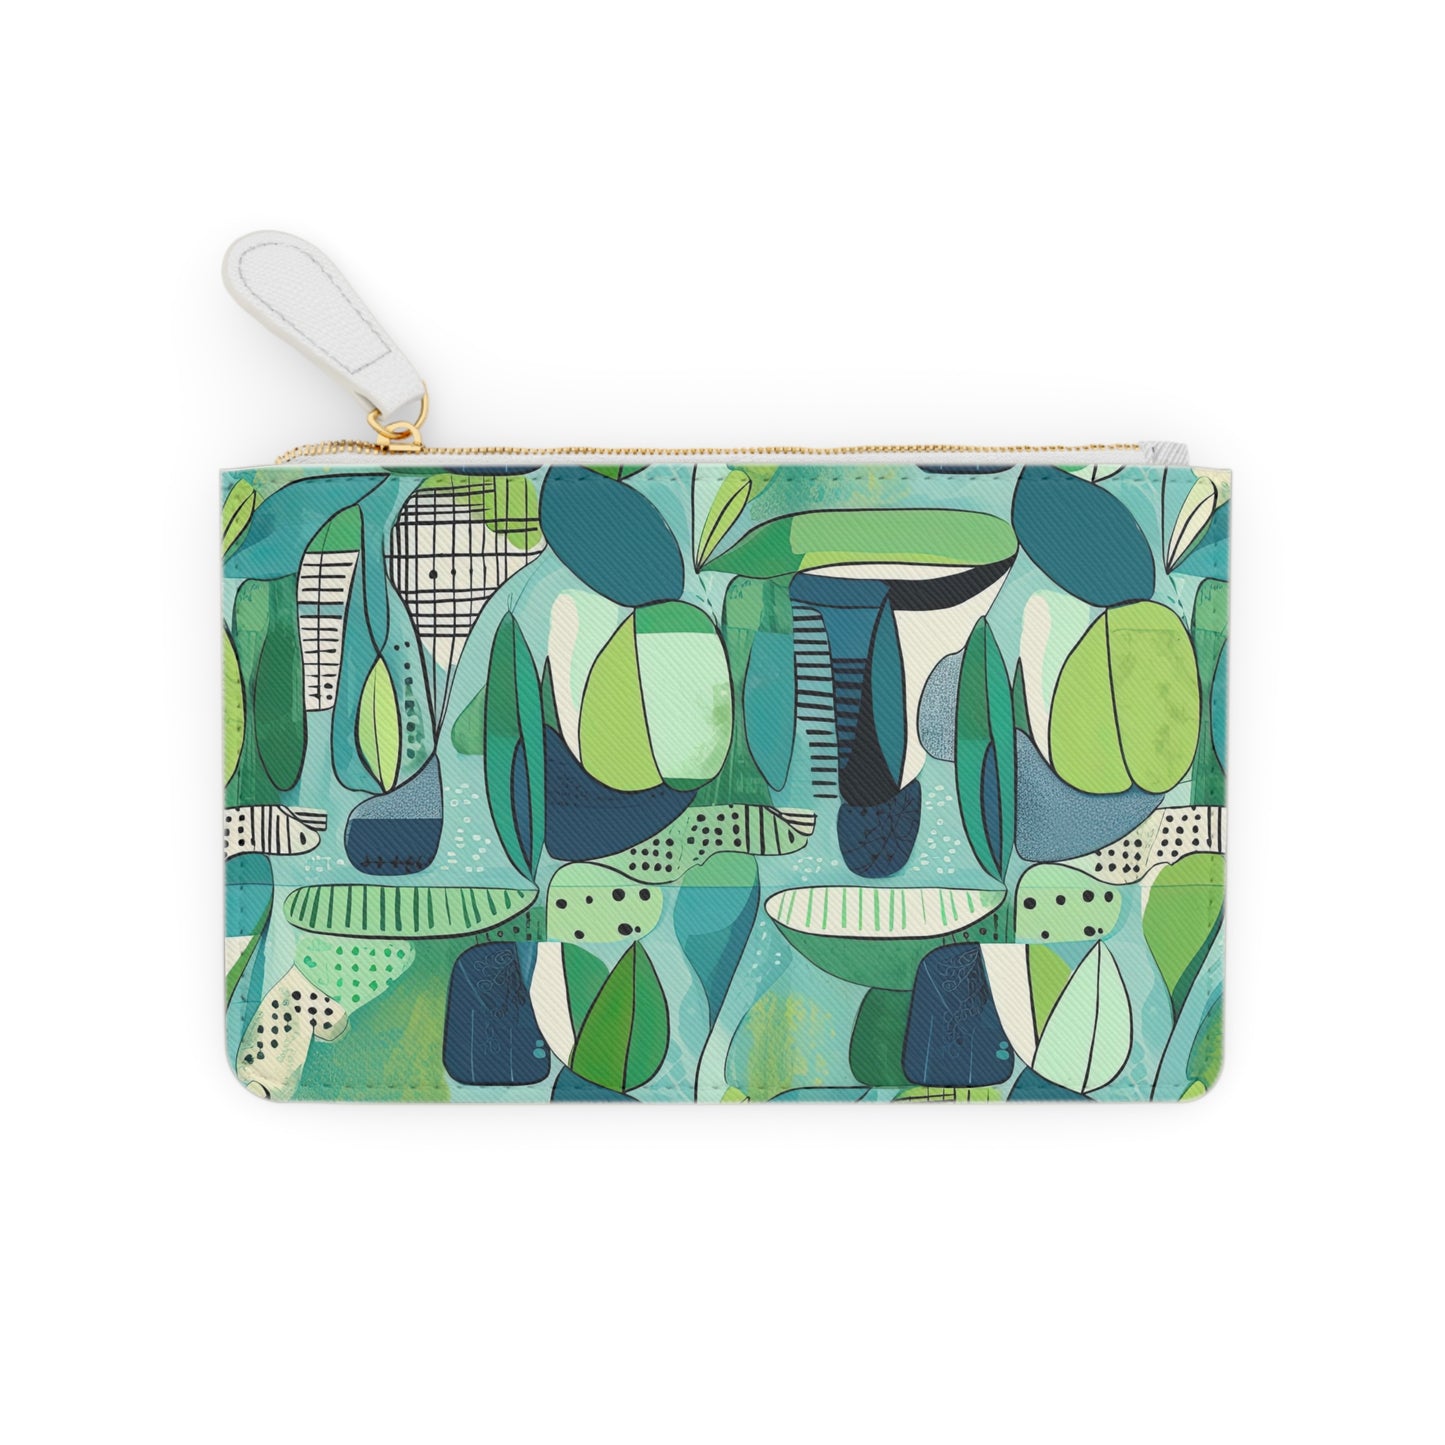 Cubist Midcentury Modern Garden Blue Green Graphic Coin Purse Mini Pouch Clutch Bag